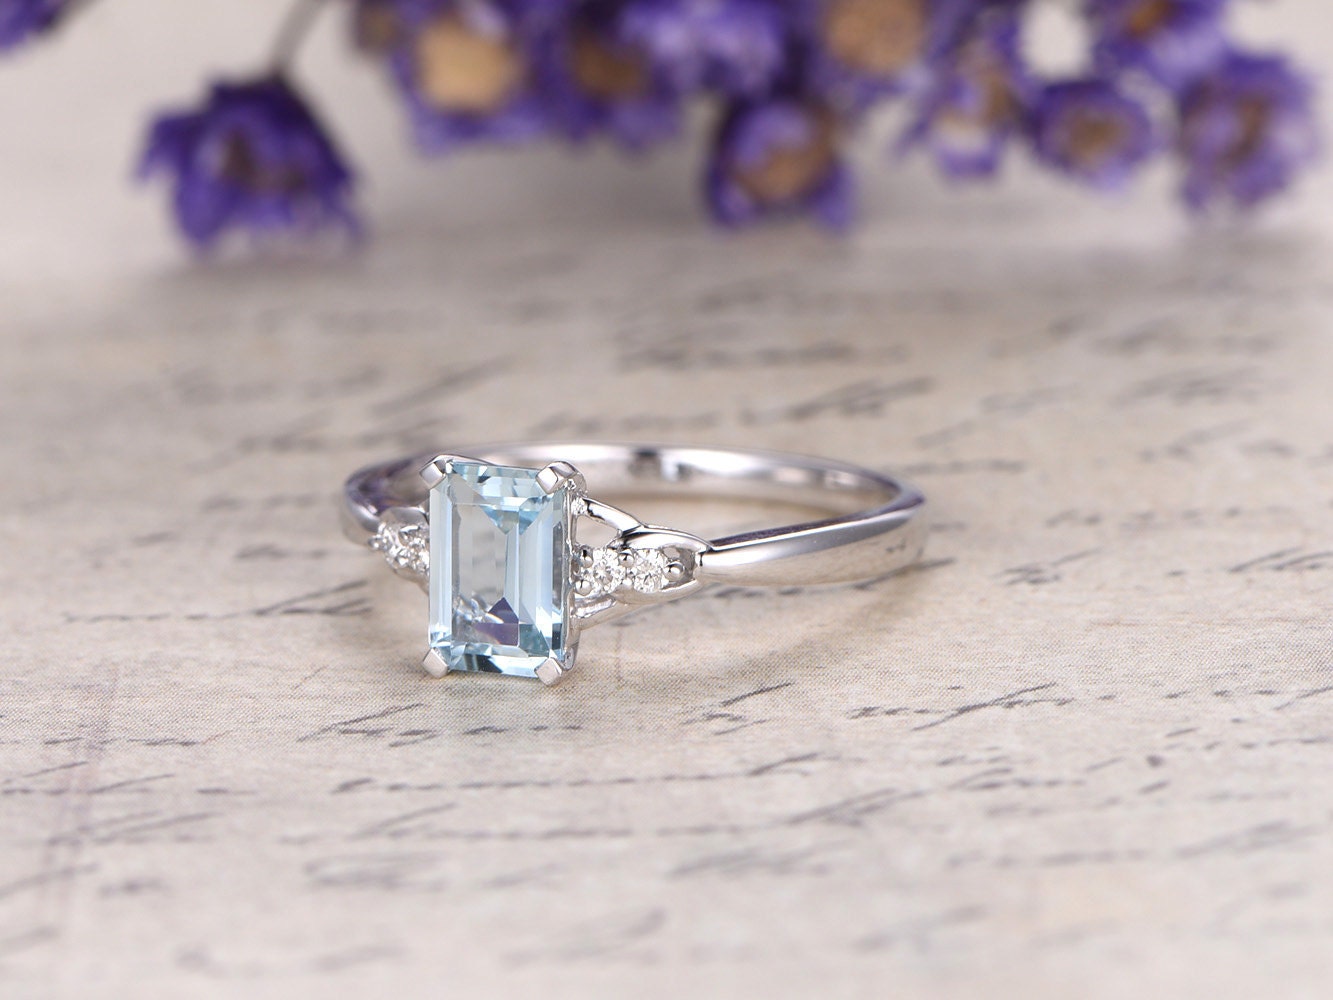 Natural aquamarine engagement ring real diamond ring solid 14k 18k white gold aquamarine ring vintage wedding promise ring gift fine jewelry - PENFINE